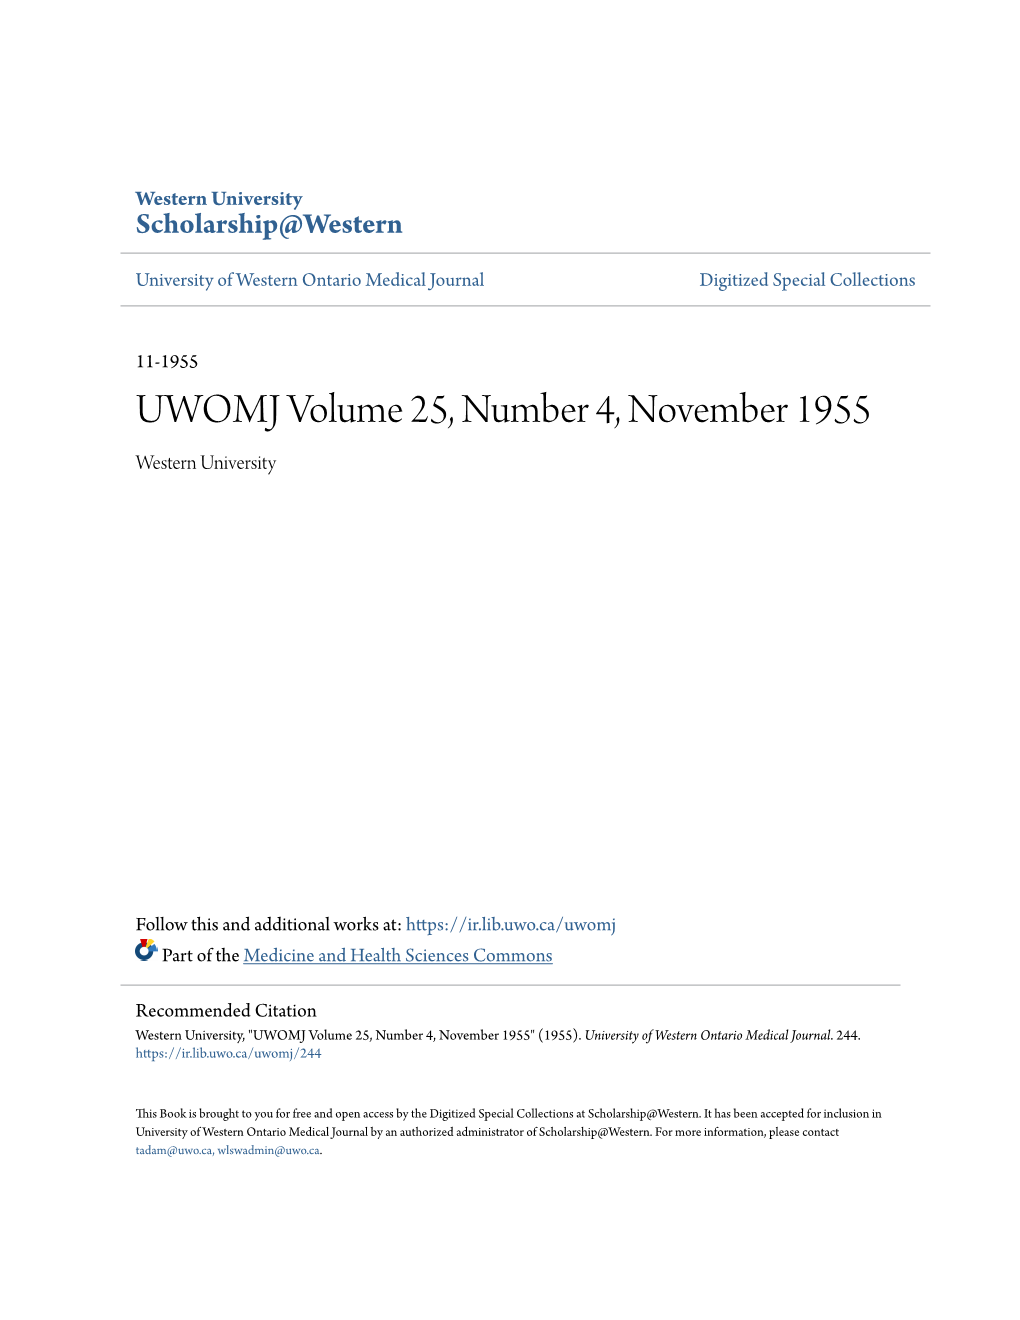 UWOMJ Volume 25, Number 4, November 1955 Western University